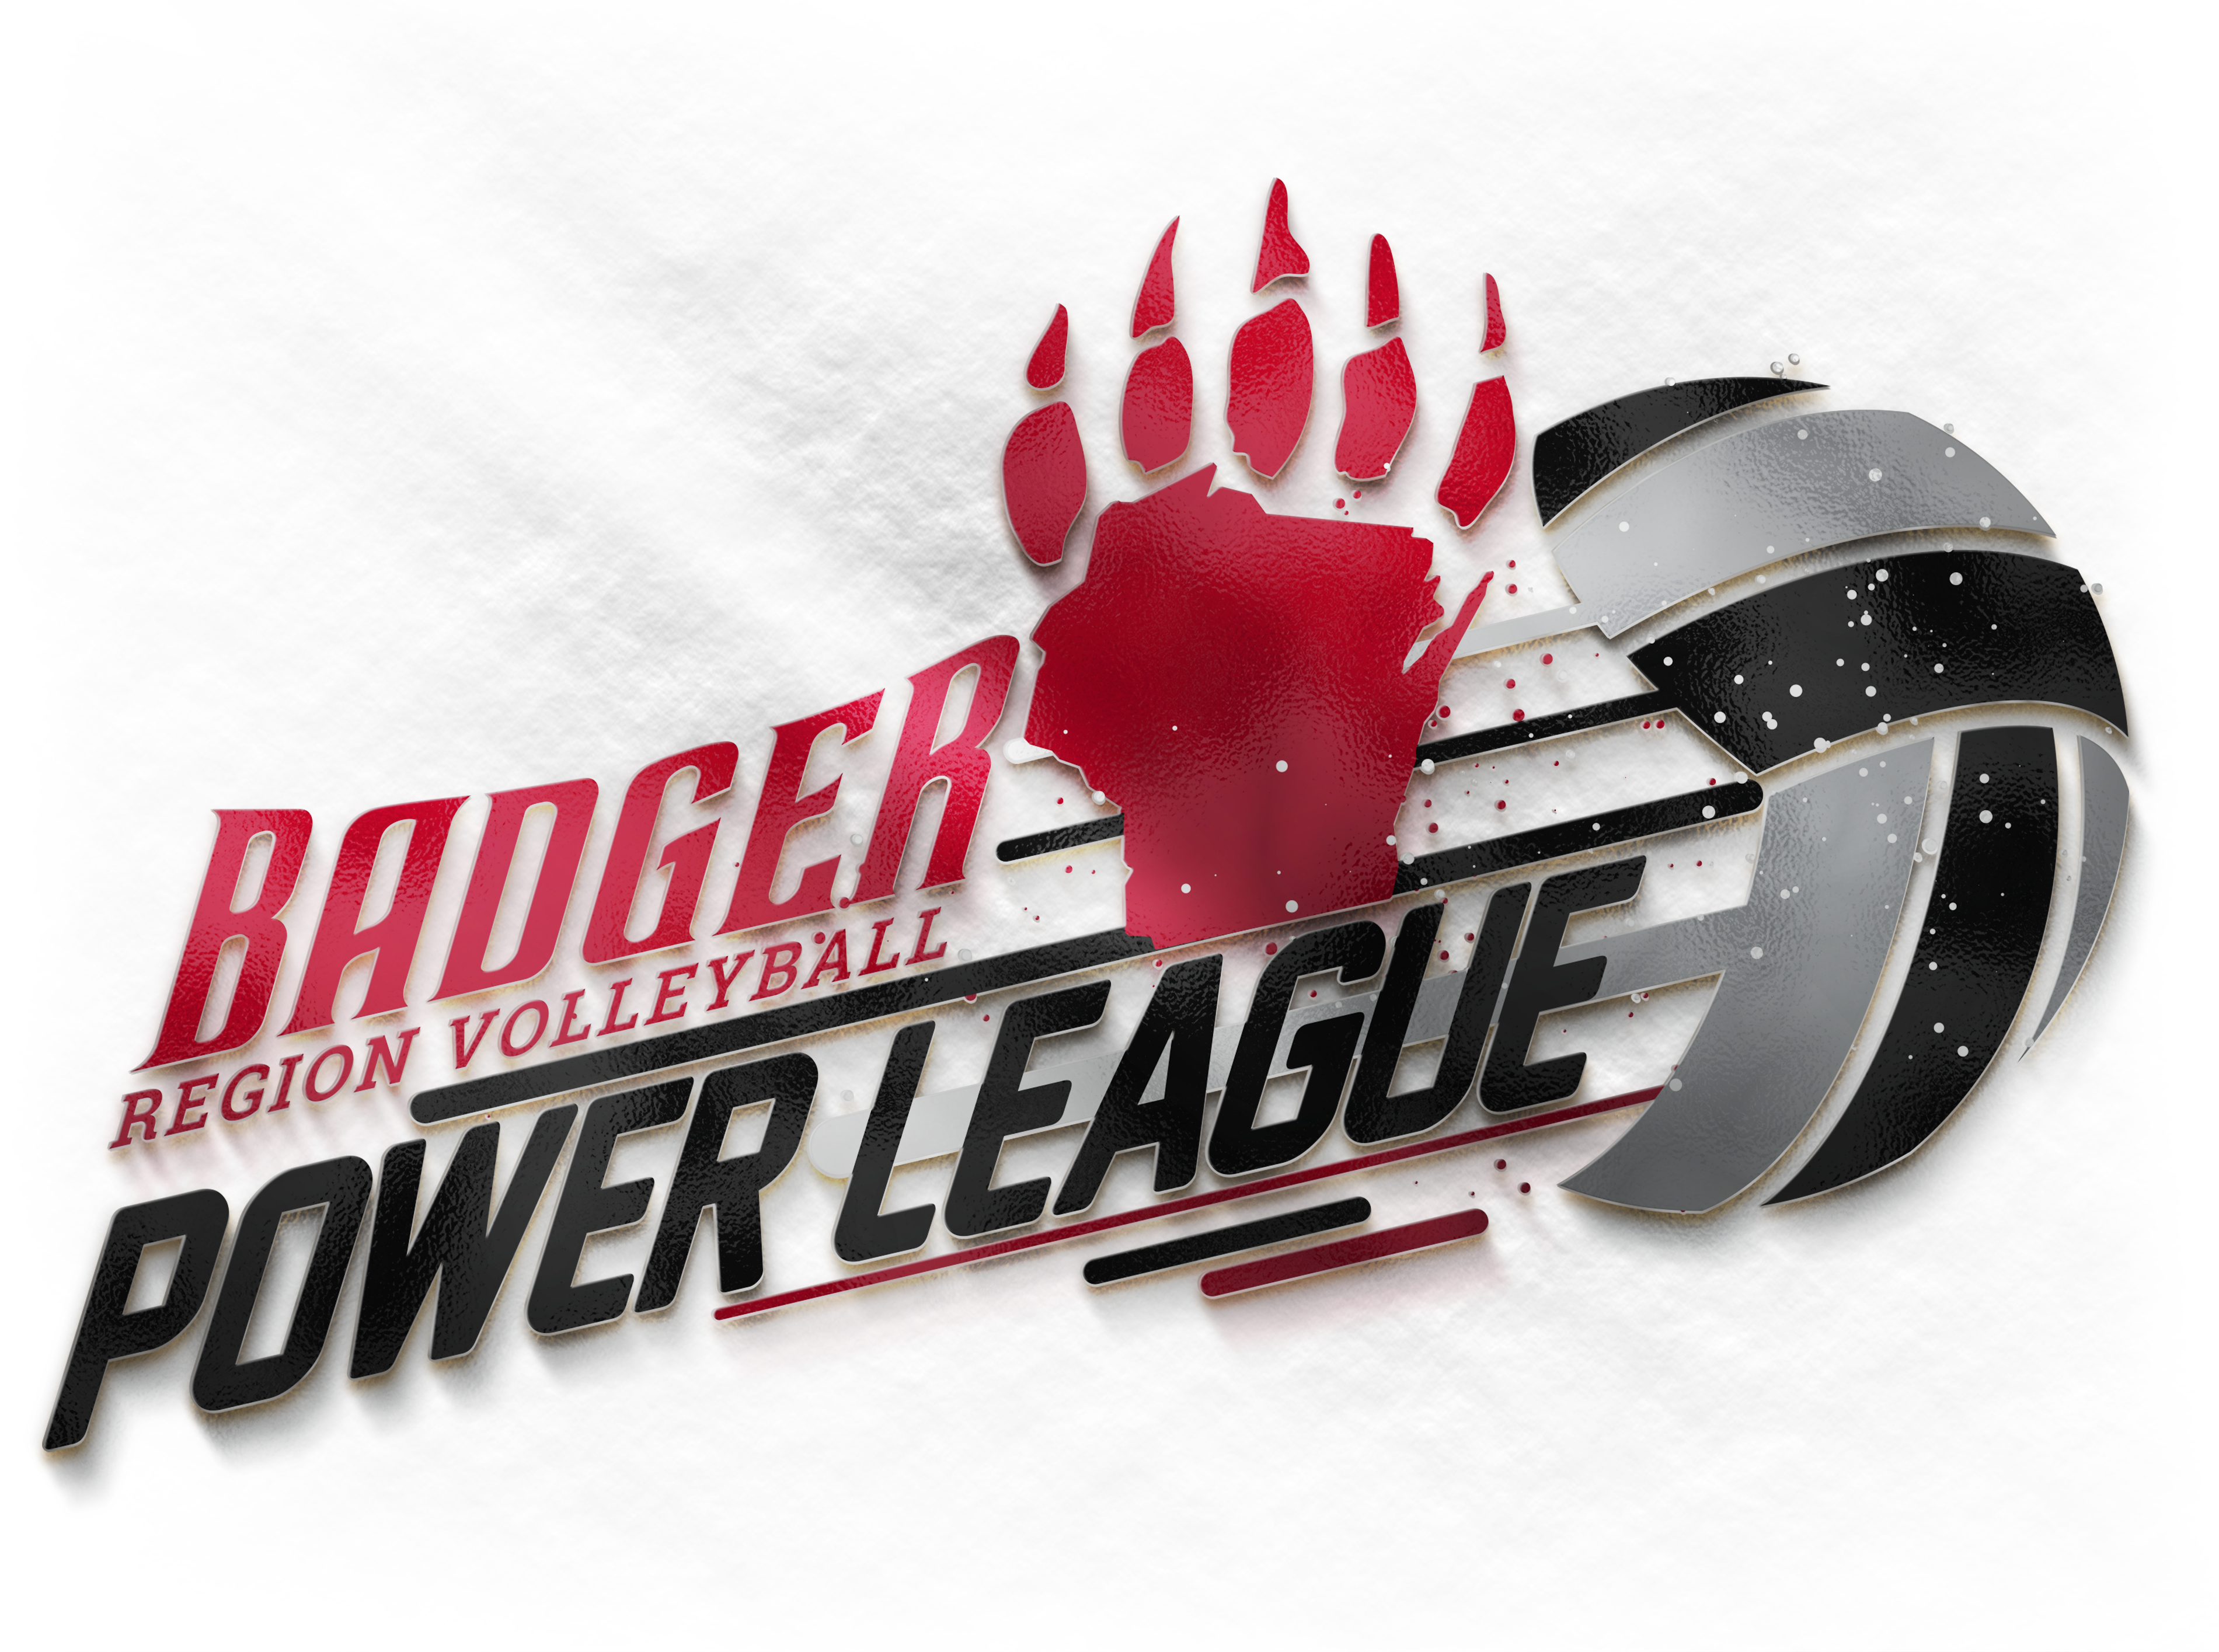 Badger Region Volleyball Power League